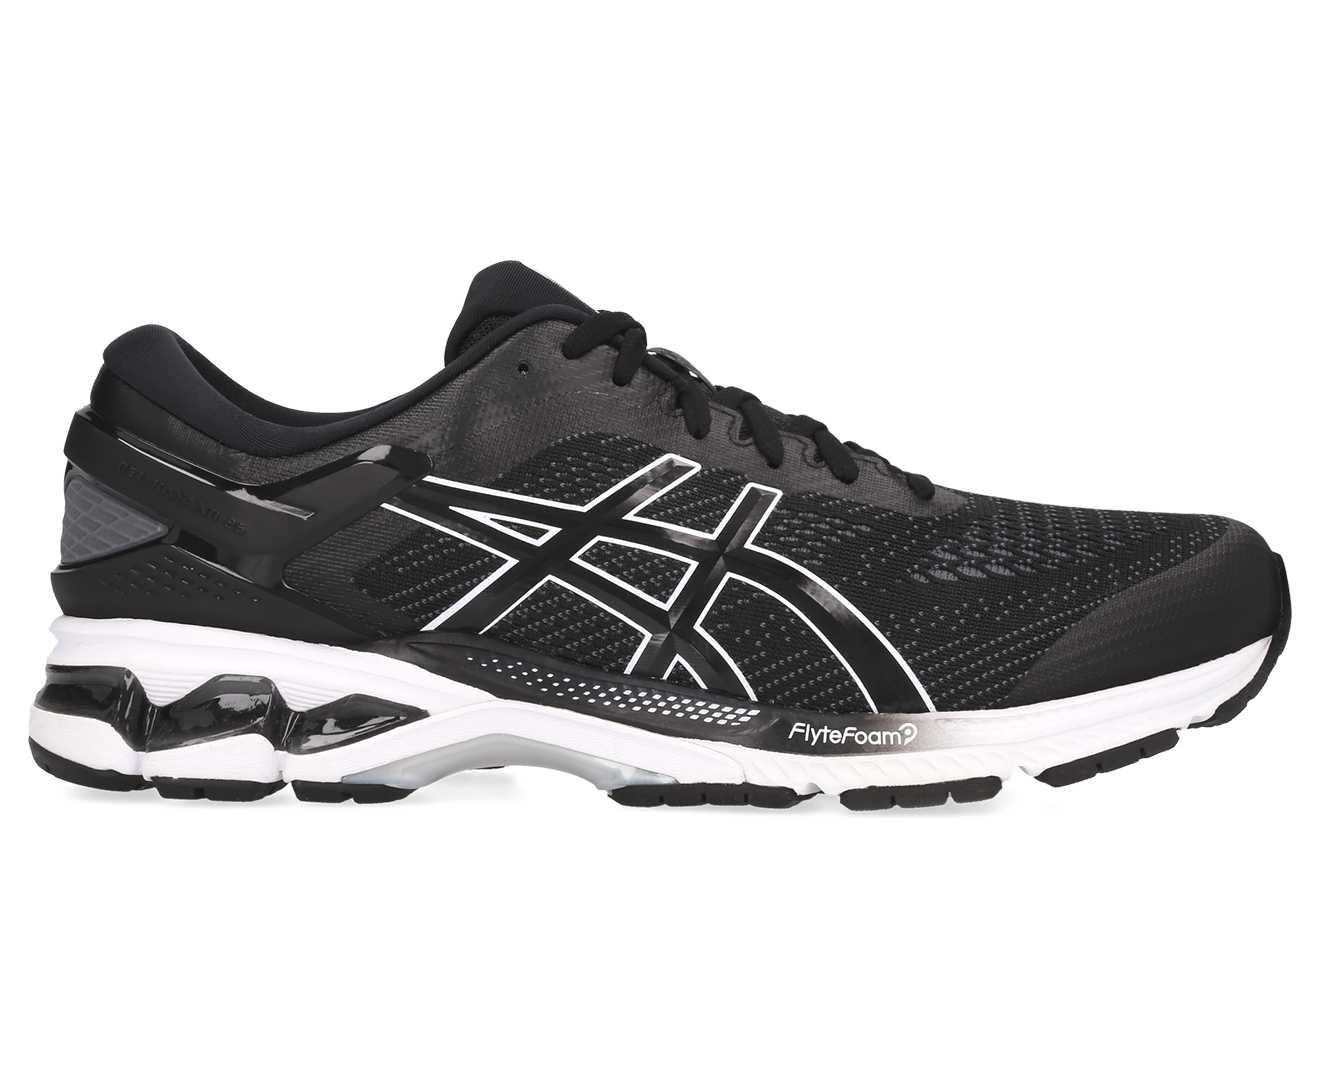 ASICS Men's GEL-Kayano 26 Running Shoes - Black/White | Catch.com.au